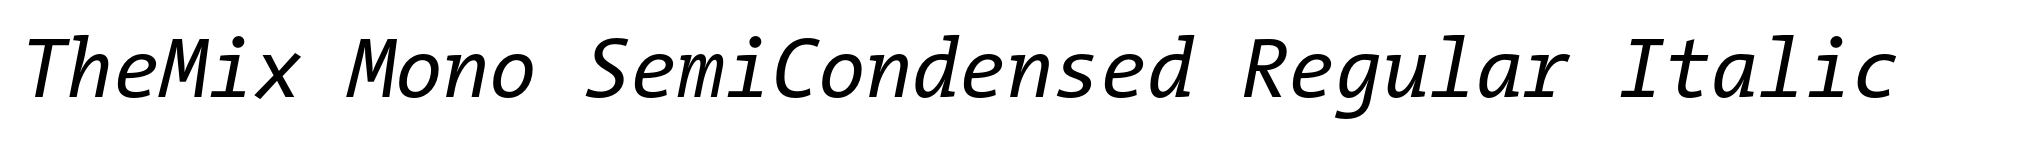 TheMix Mono SemiCondensed Regular Italic image